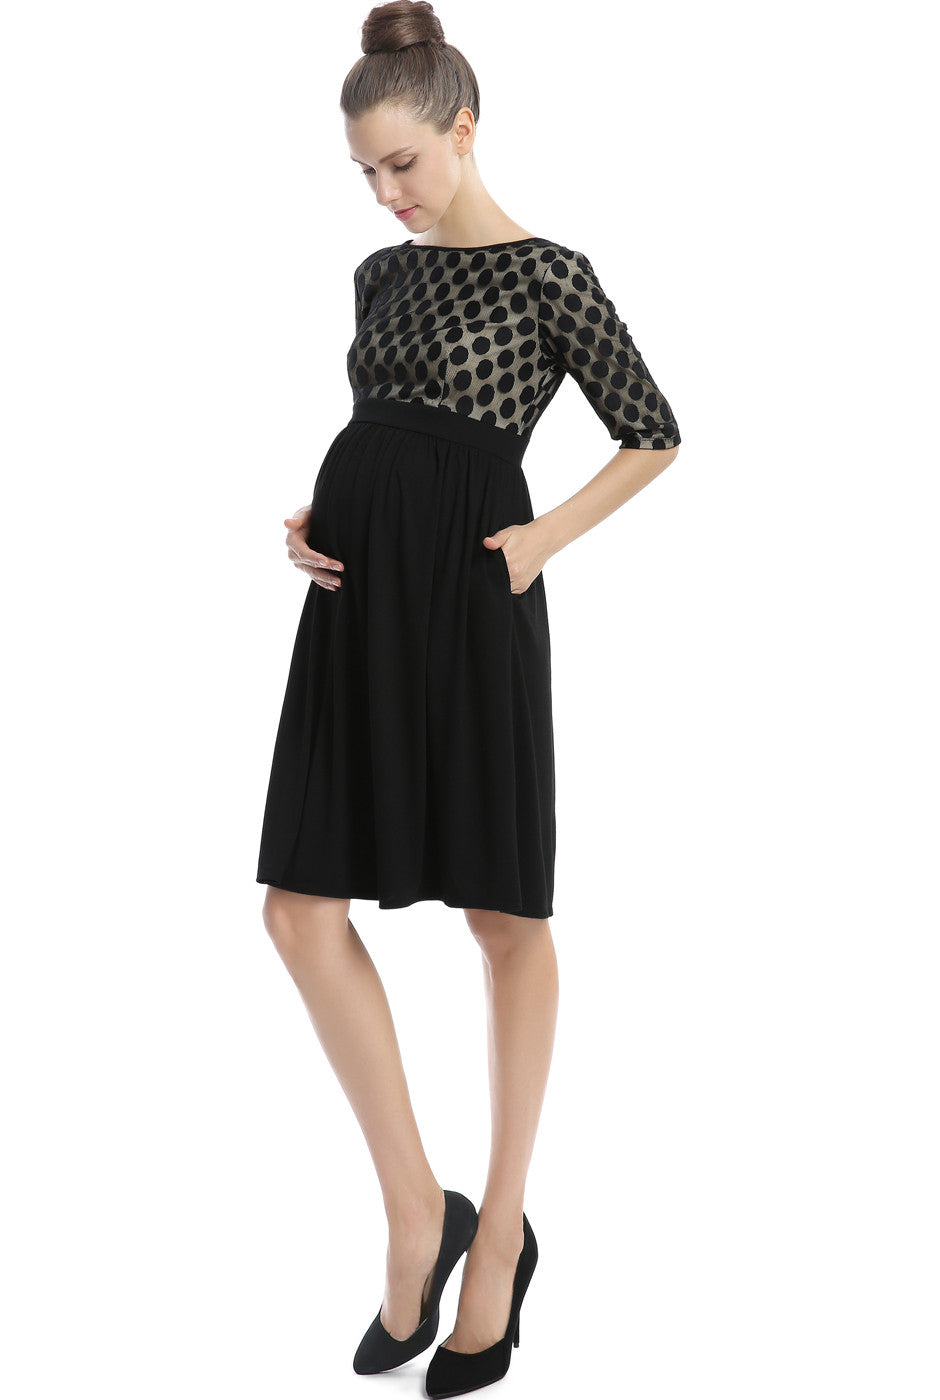 Kimi + Kai Maternity "Charlie" Polka Dot Lace Top Empire Waist Dress